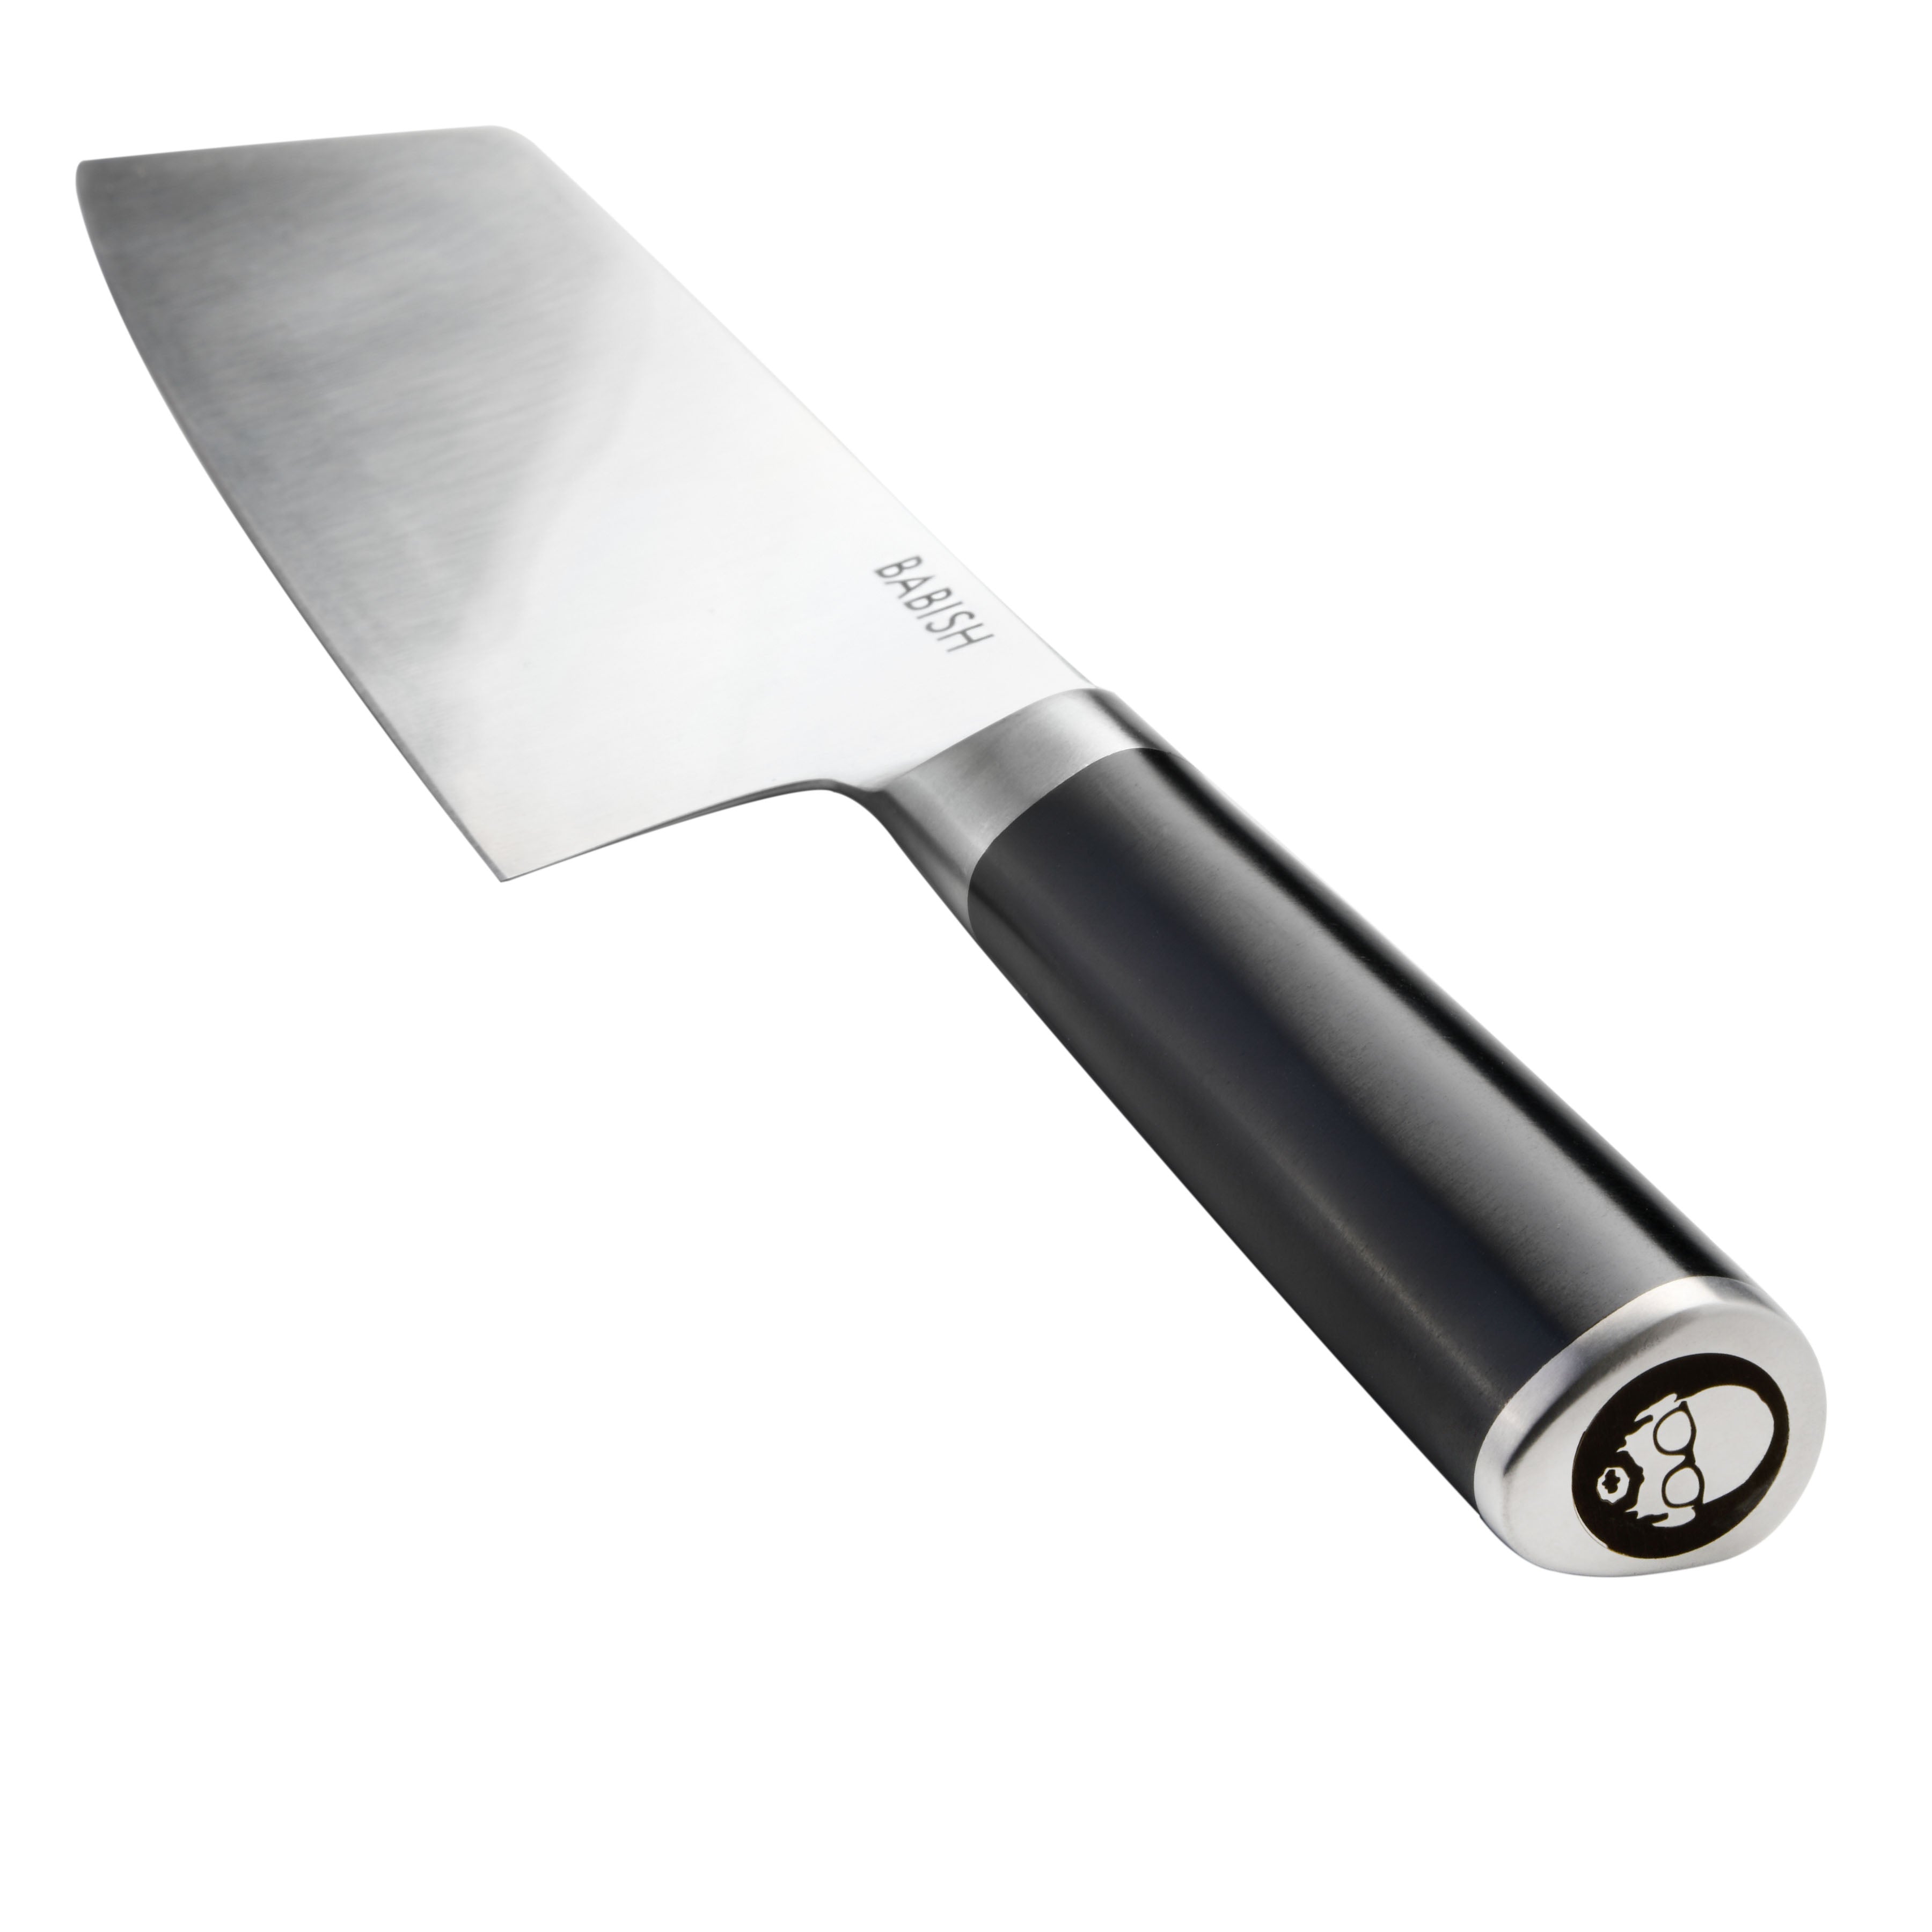  Babish High-Carbon 1.4116 German Steel Cutlery, 8 Chef Knife,  & High-Carbon 1.4116 German Steel Cutlery, Bread Knife: Home & Kitchen